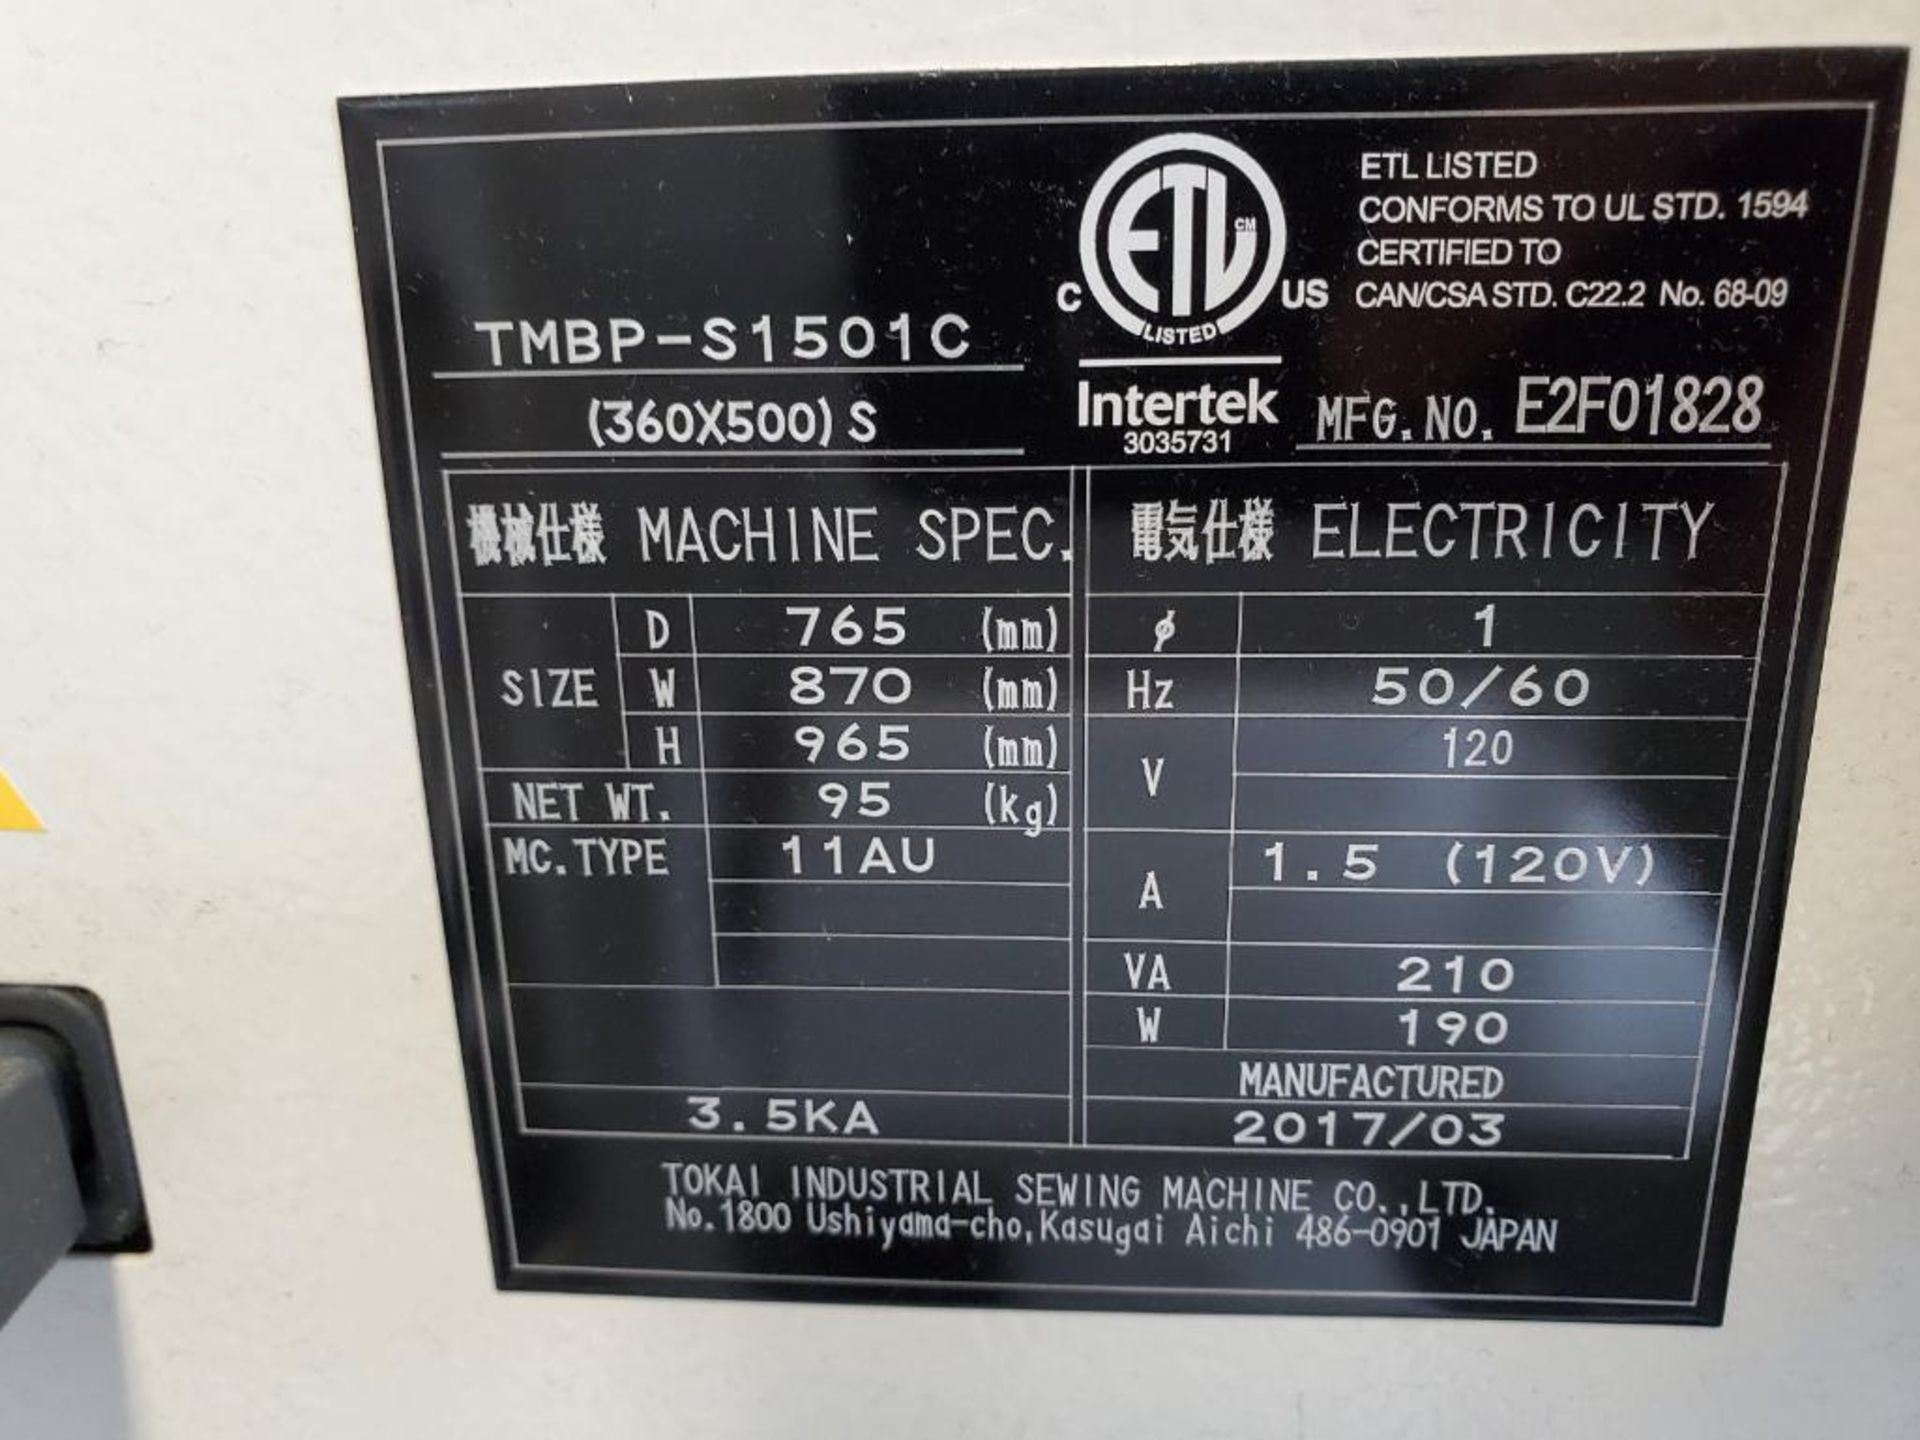 2017 TOKIA TAJIMA ELECTRONIC AUTOMATIC SEWING EMBROIDERY MACHINE, MODEL TMBP-S1501C, 15-THREAD SPOOL - Image 7 of 7